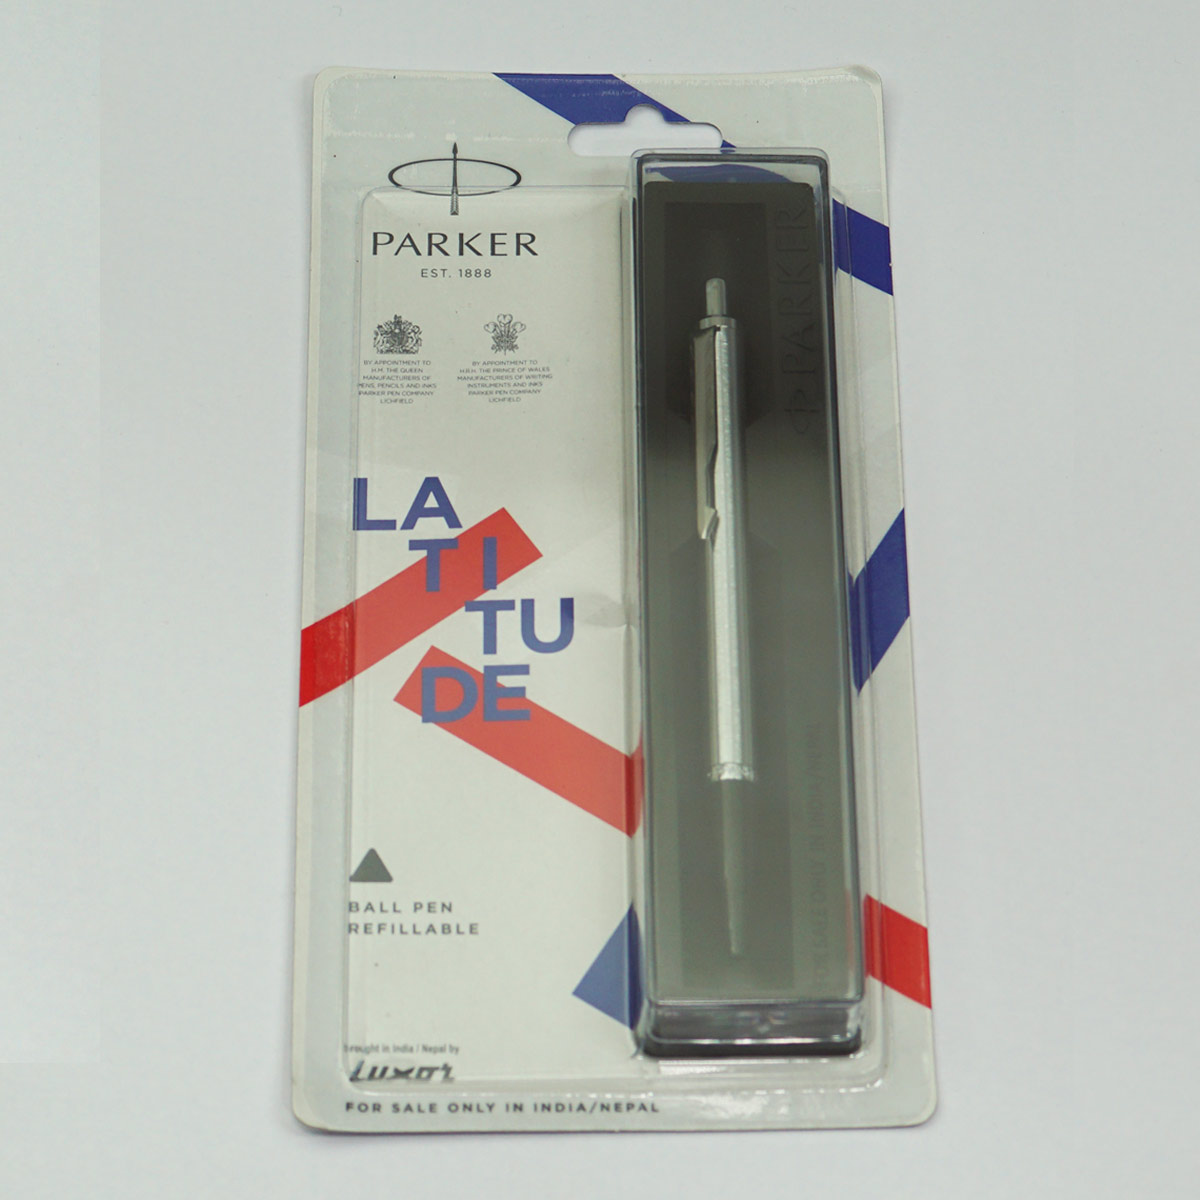 Parker Latitude Silver Color Body and Silver Clip With Black Grip Medium Tip Retractable Type Ball Pen SKU 22781